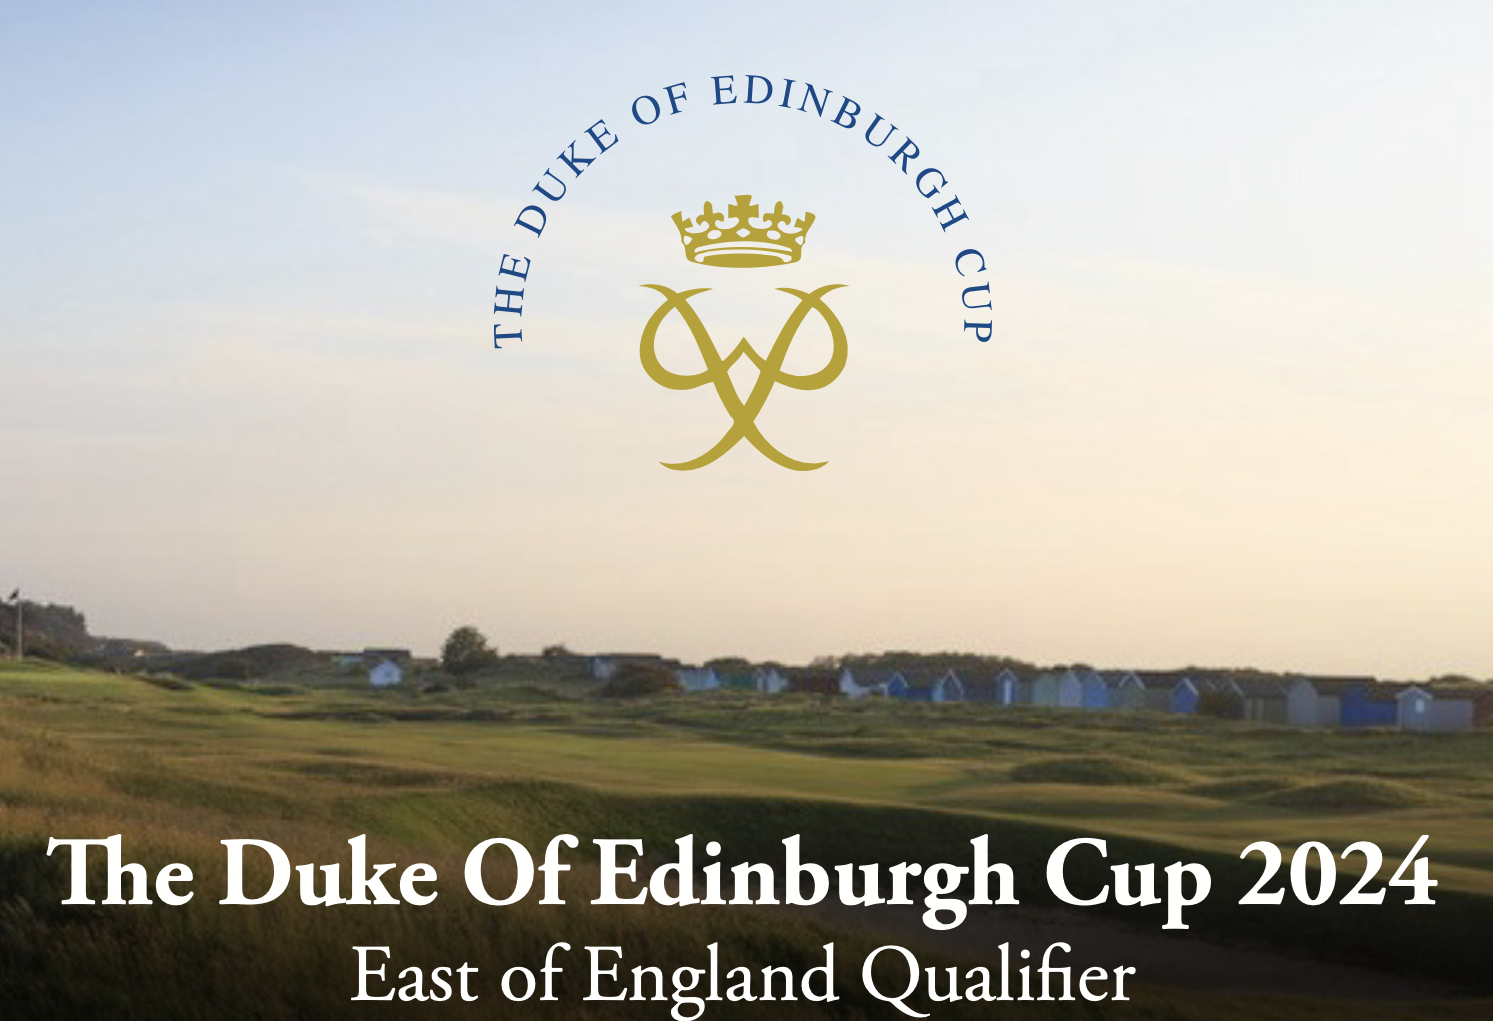 Duke of Edinburgh Cup 2024 golf